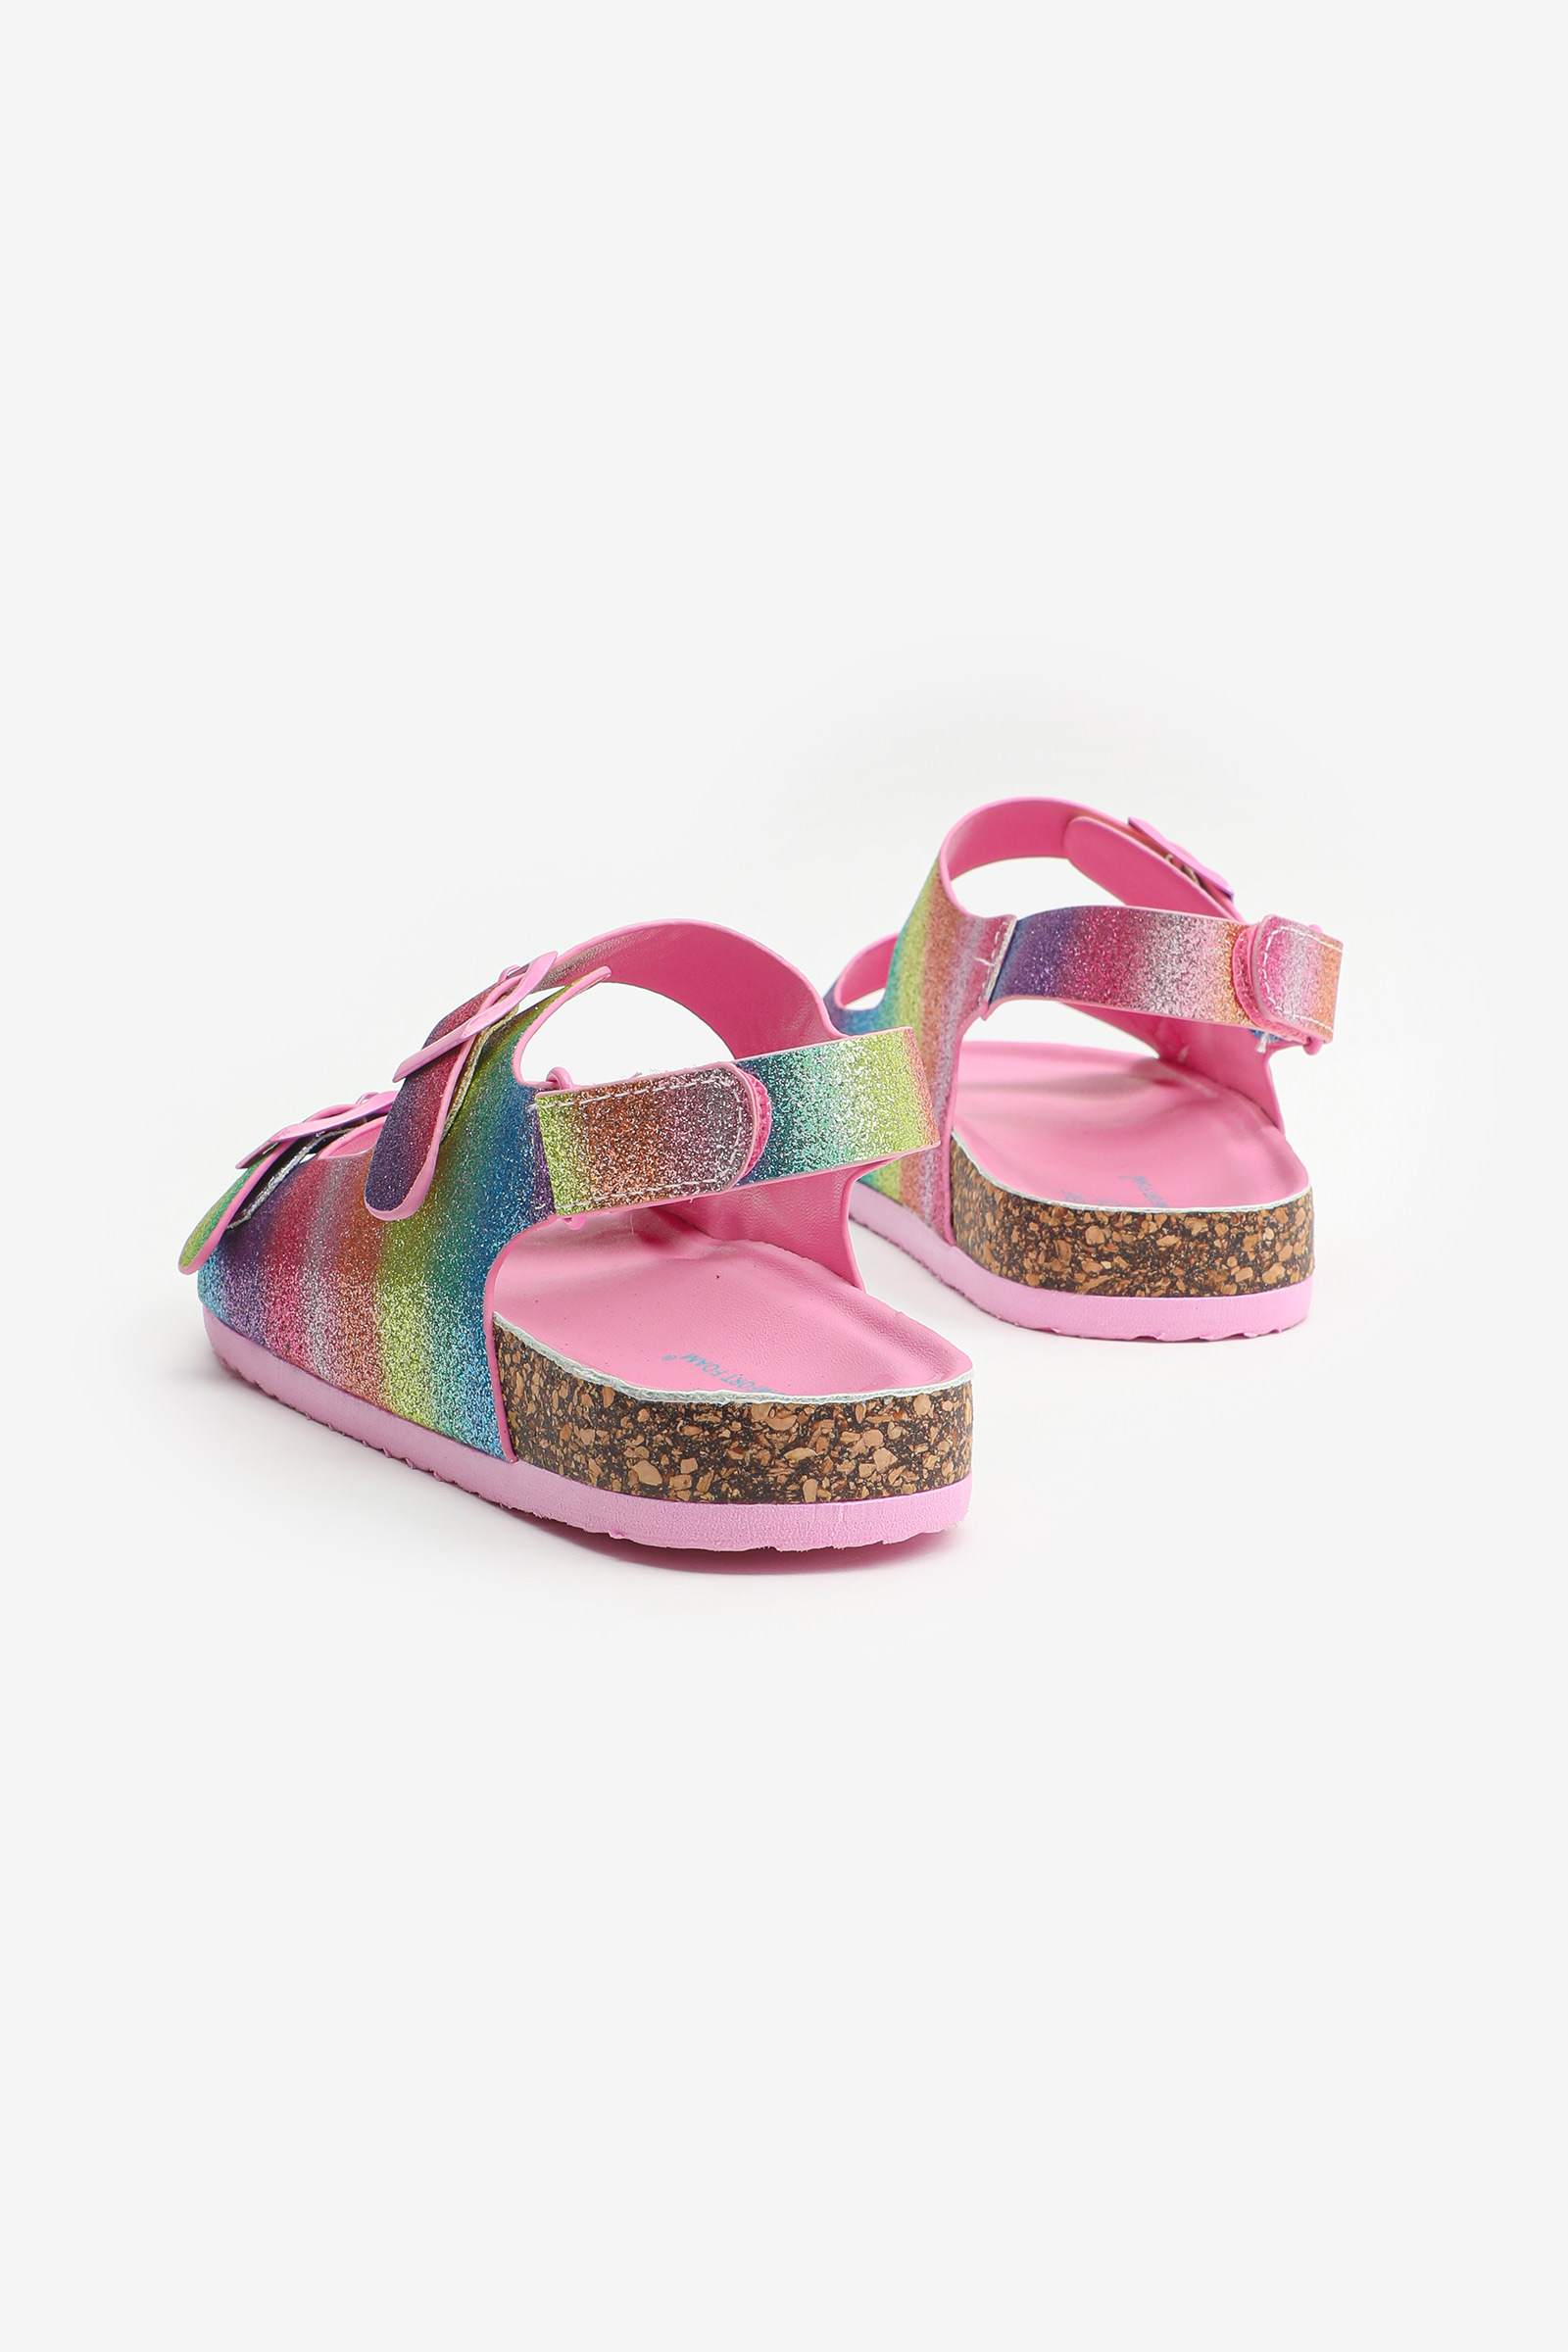 Rainbow Sandals for Girls